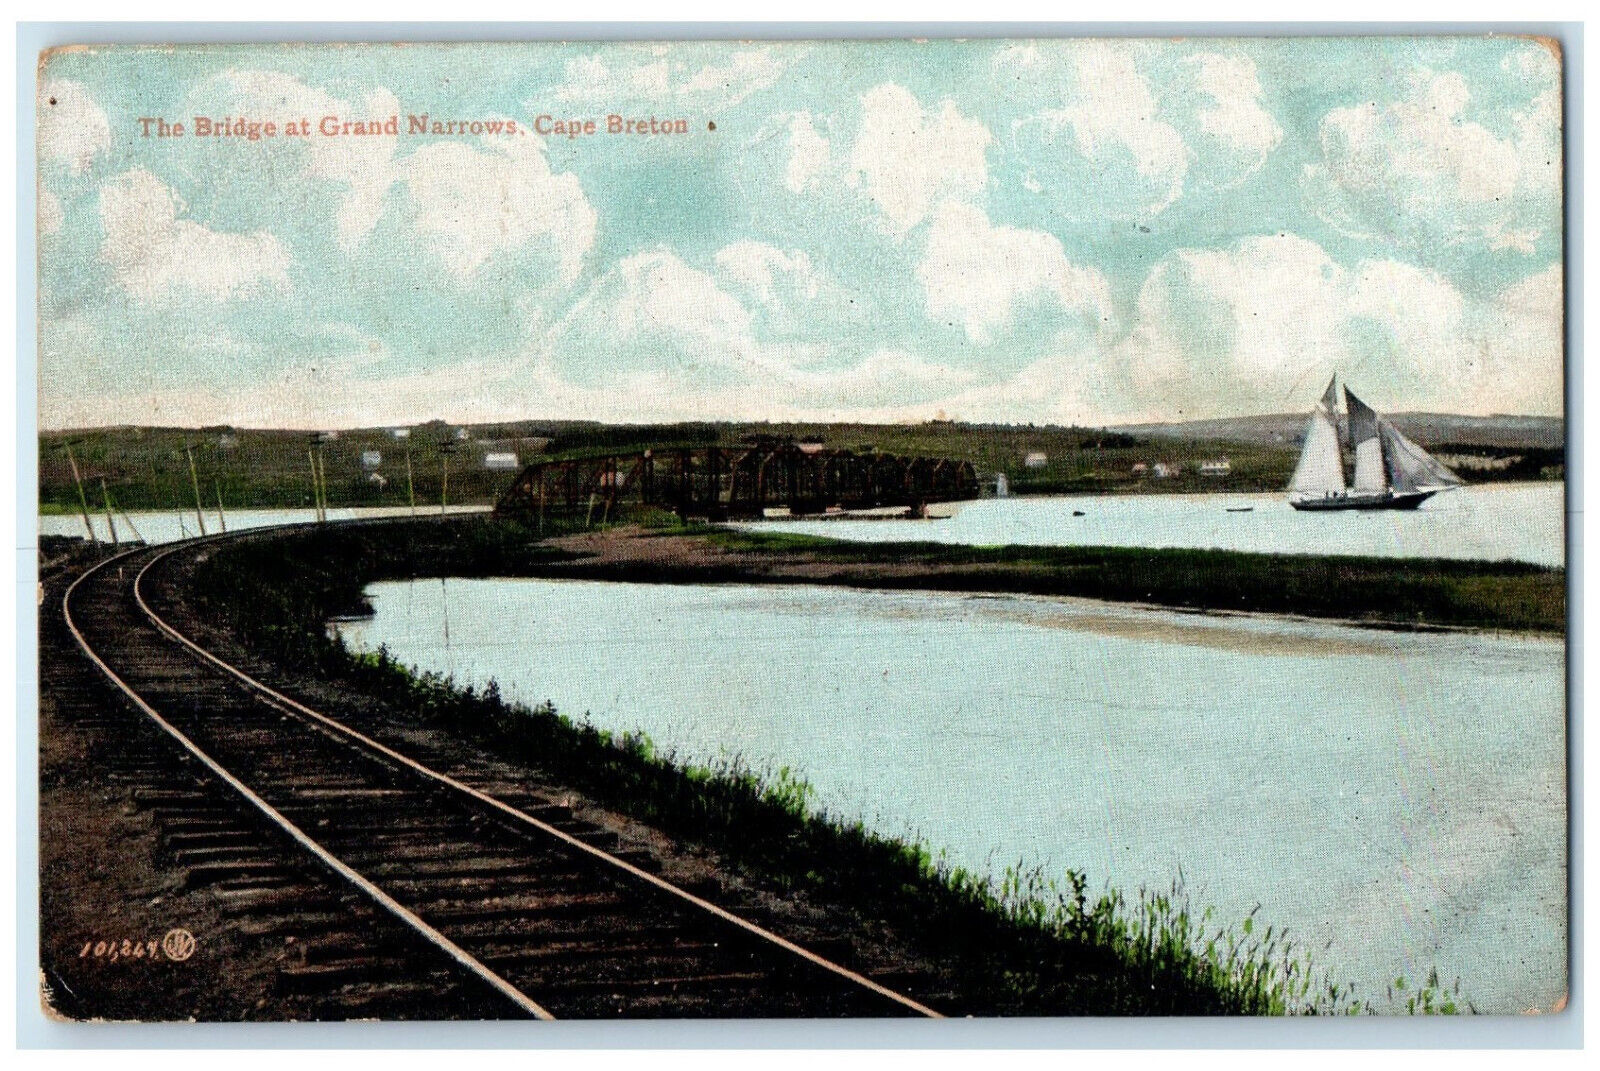 1906 Boat The Bridge at Grand Narrows Cape Breton Nova Scotia Canada Postcard